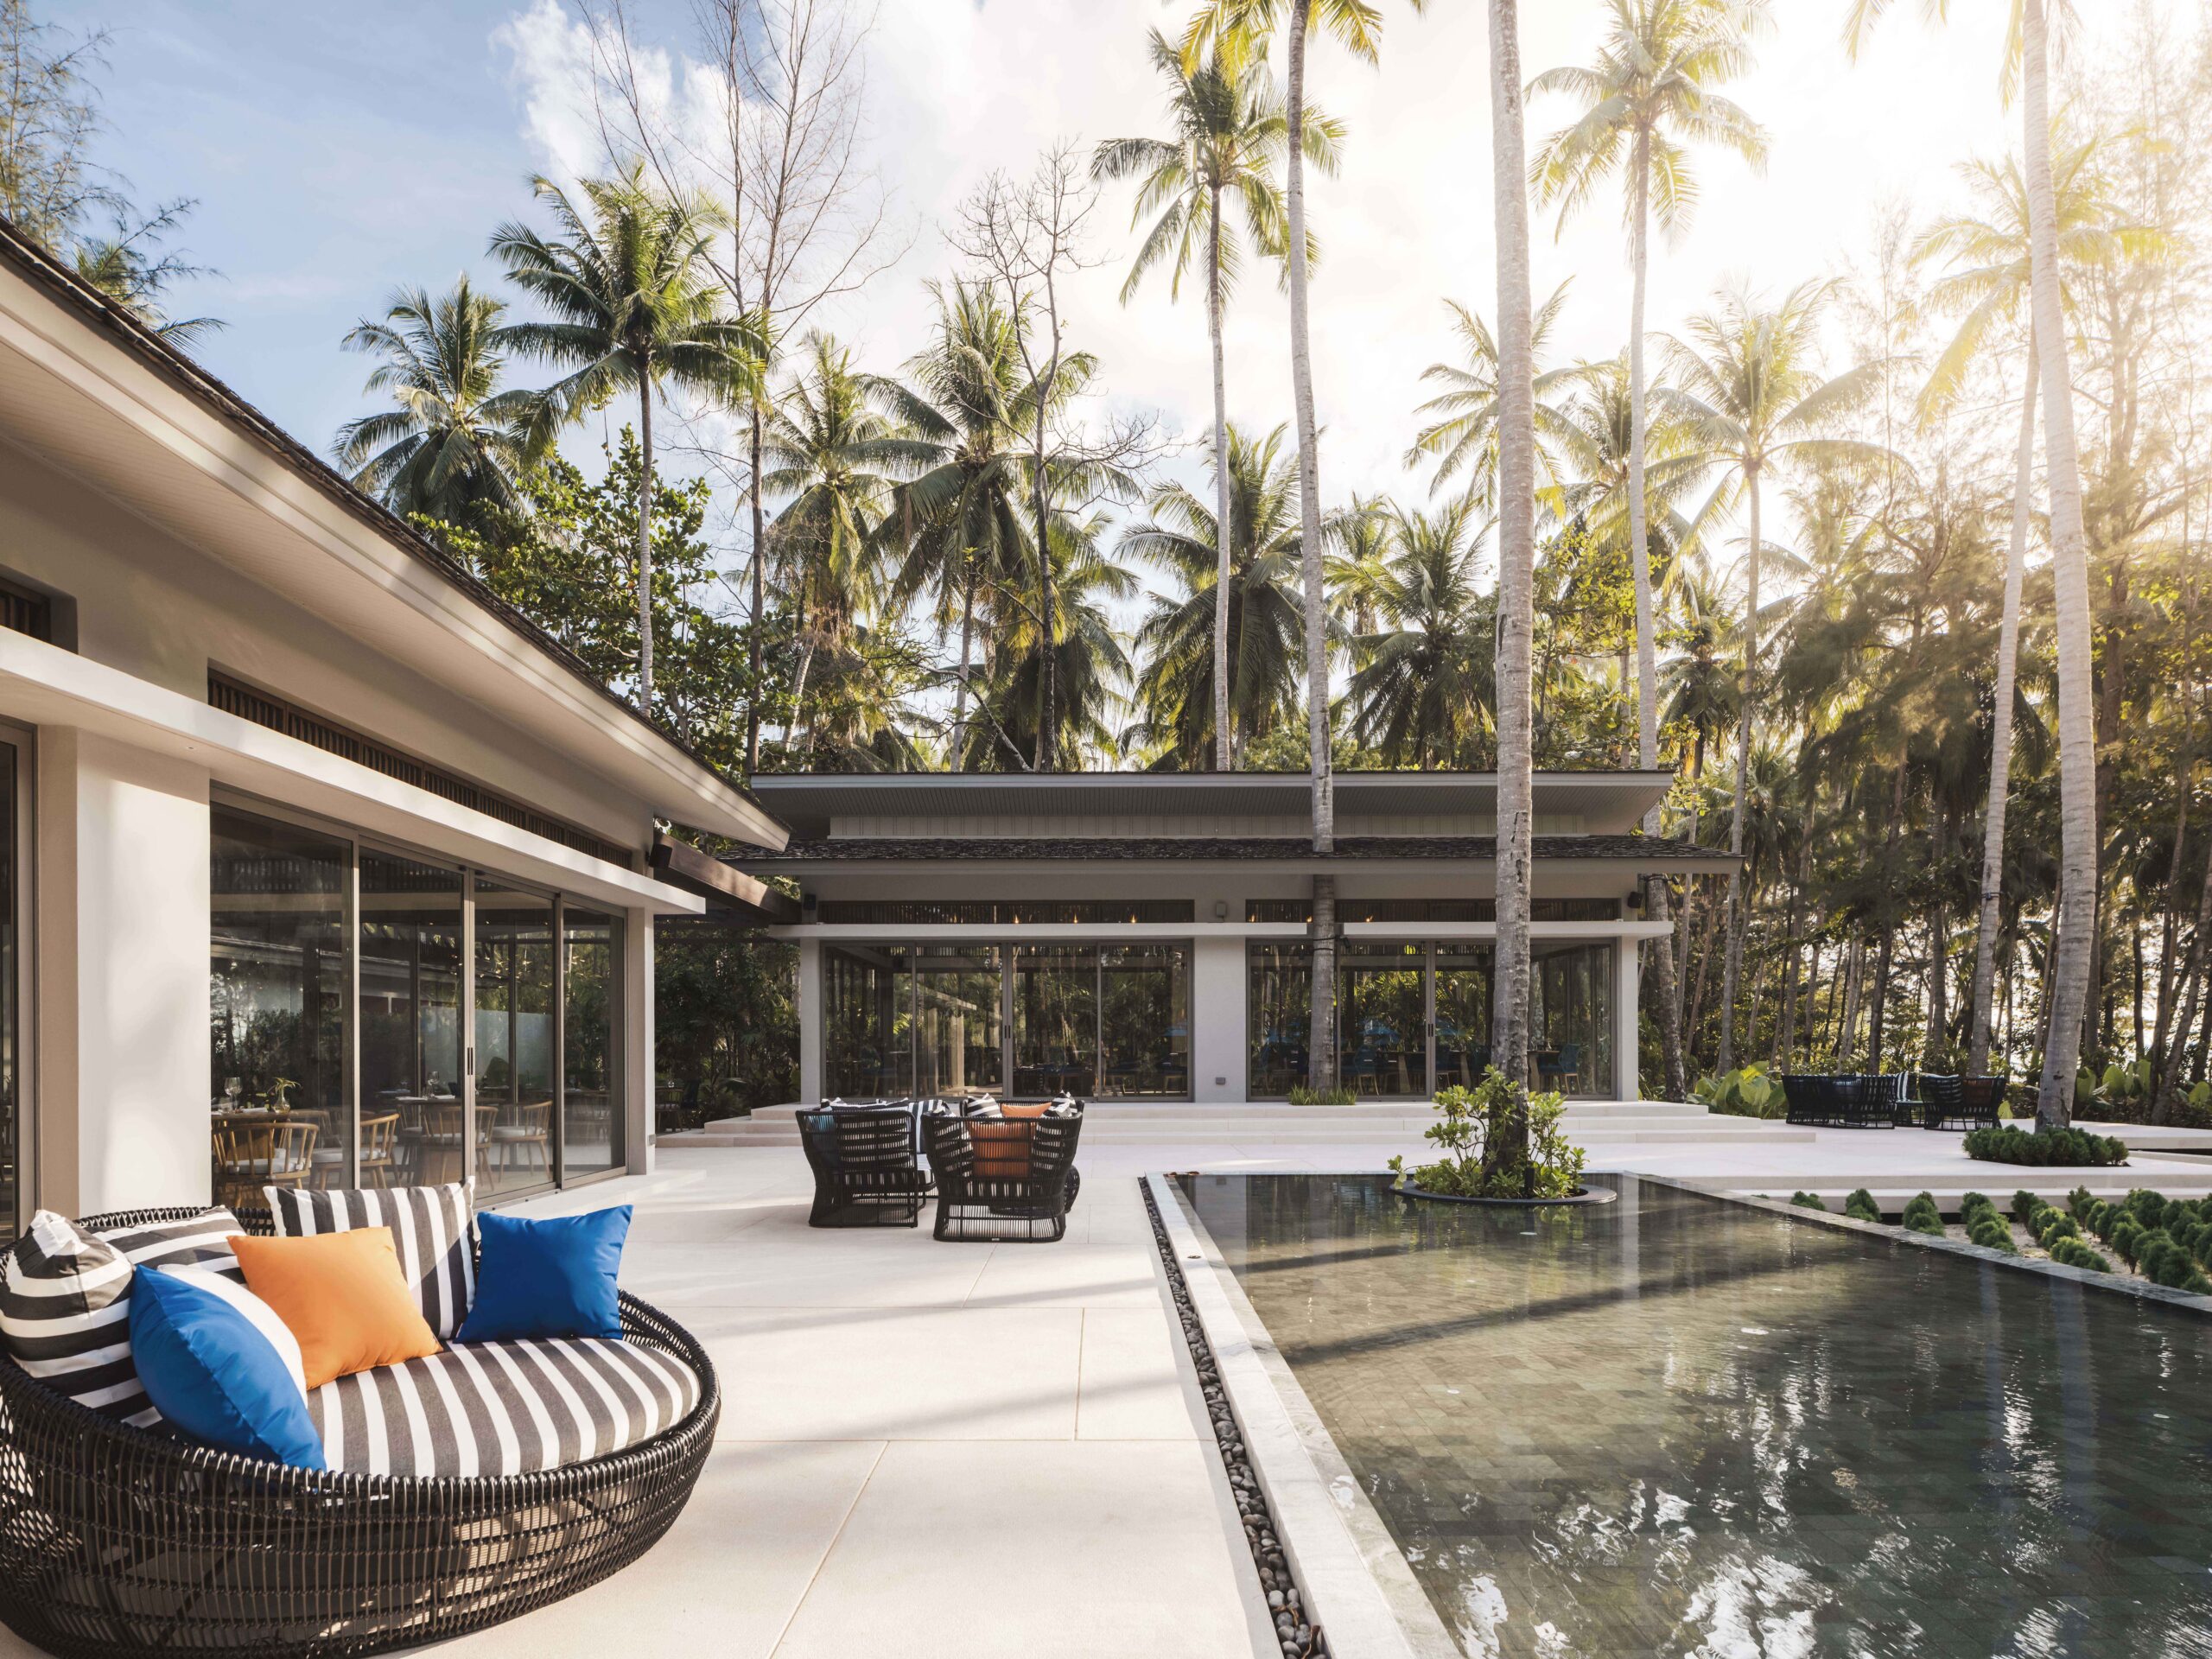 Avani Hotels adds Khao Lak to its portfolio in Thailand